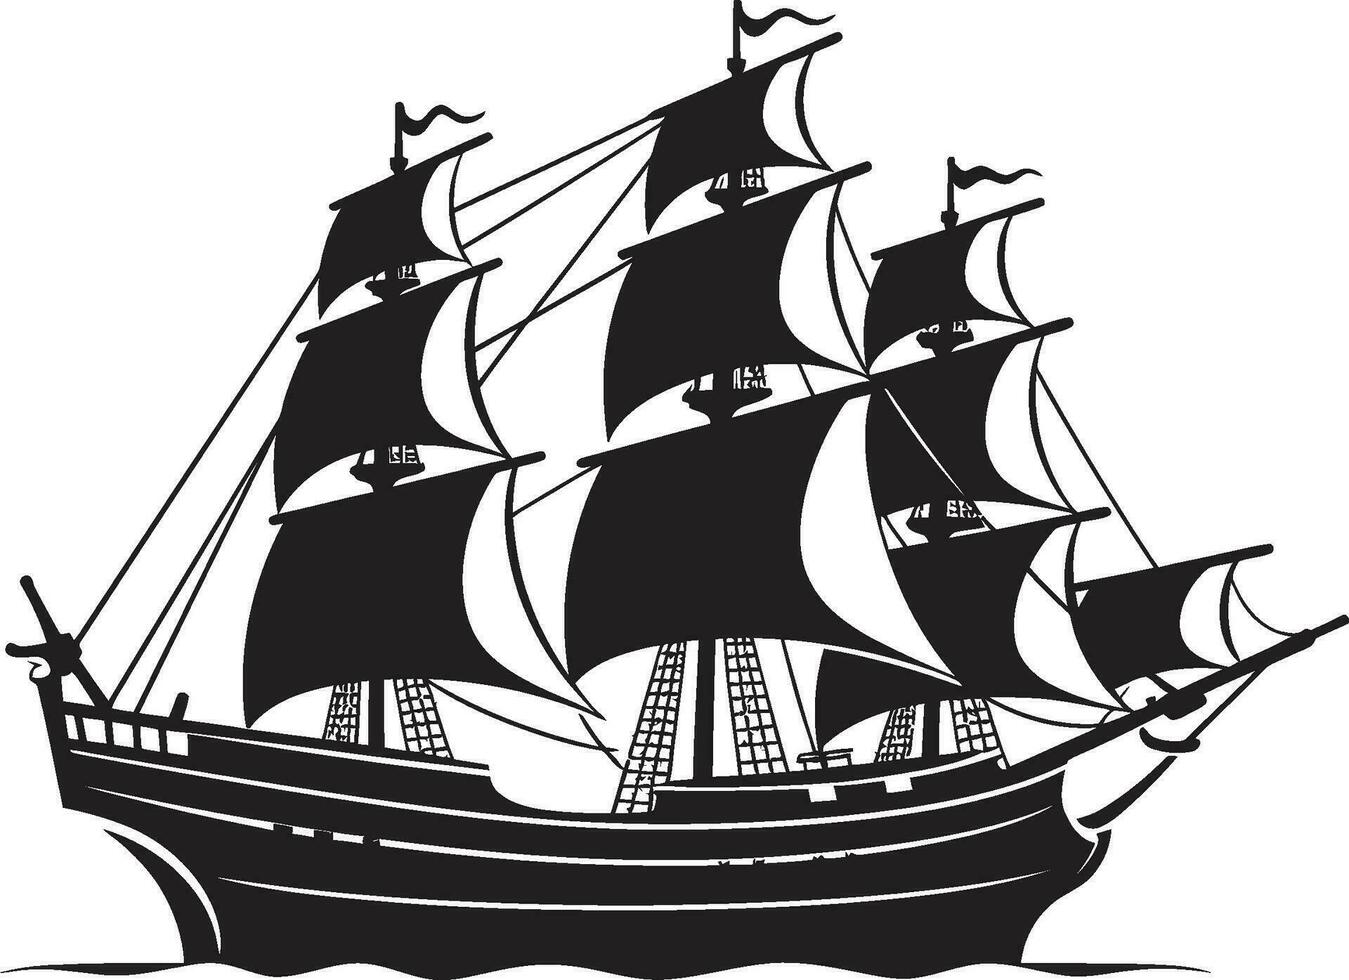 Mythical Journey Black Ship Emblem Design Antique Mariners Ancient Ship in Black vector